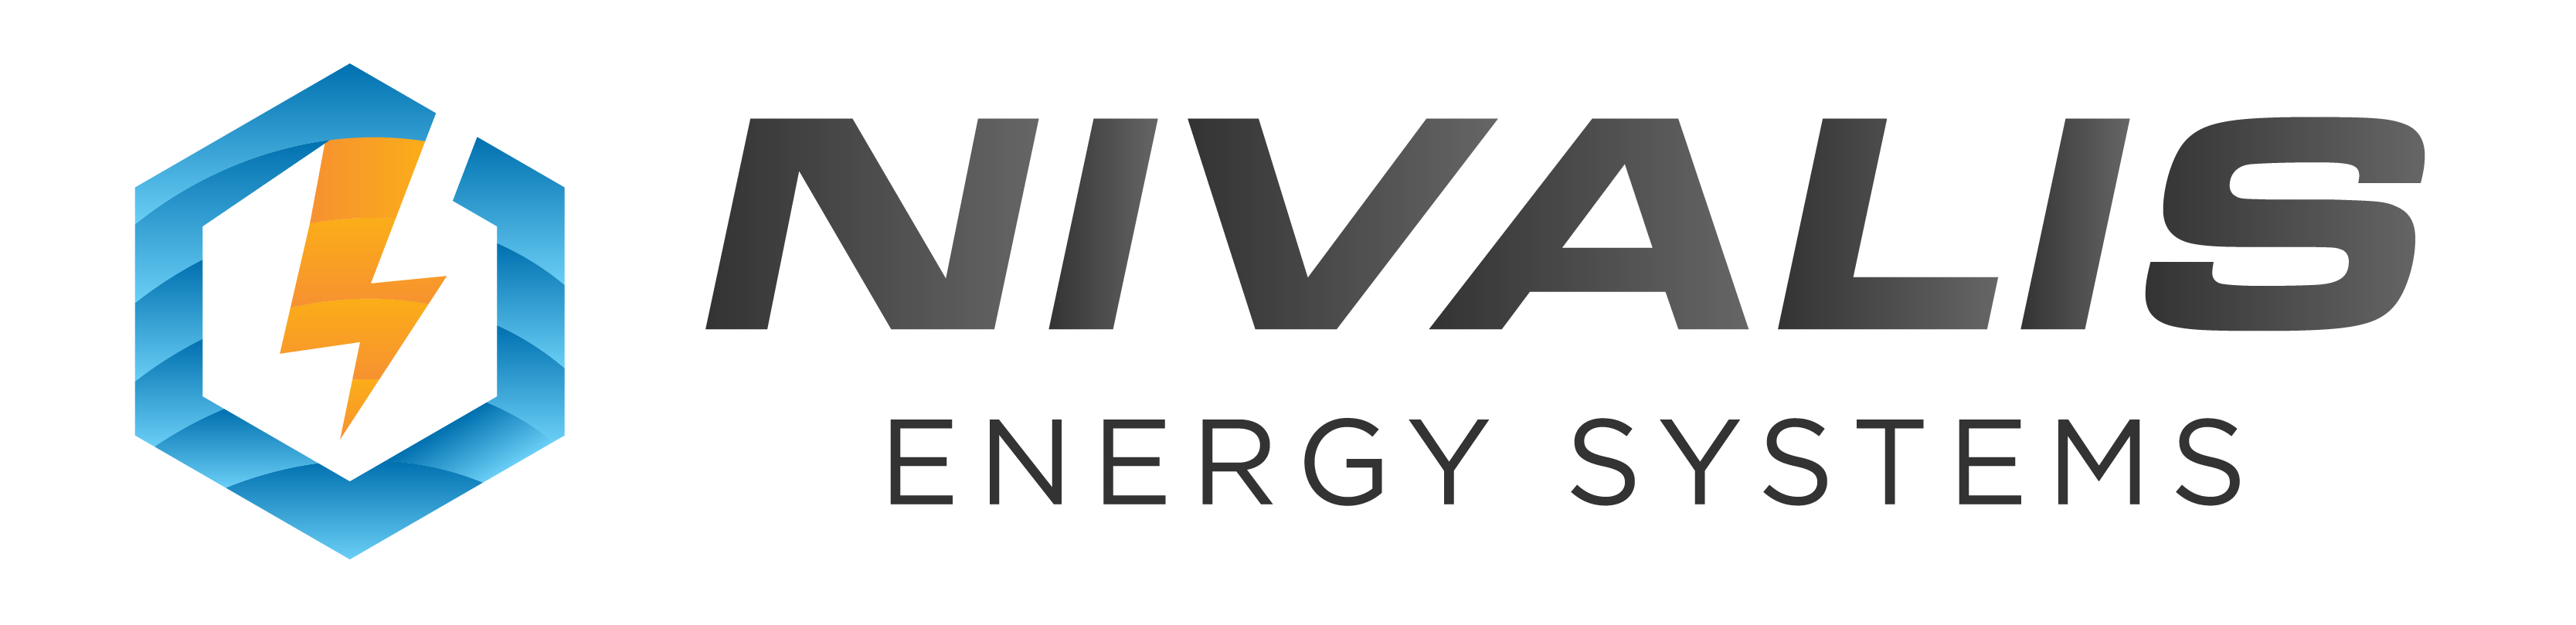 Nivalis Energy Systems Electric Transportation Refrigeration Units (TRU)